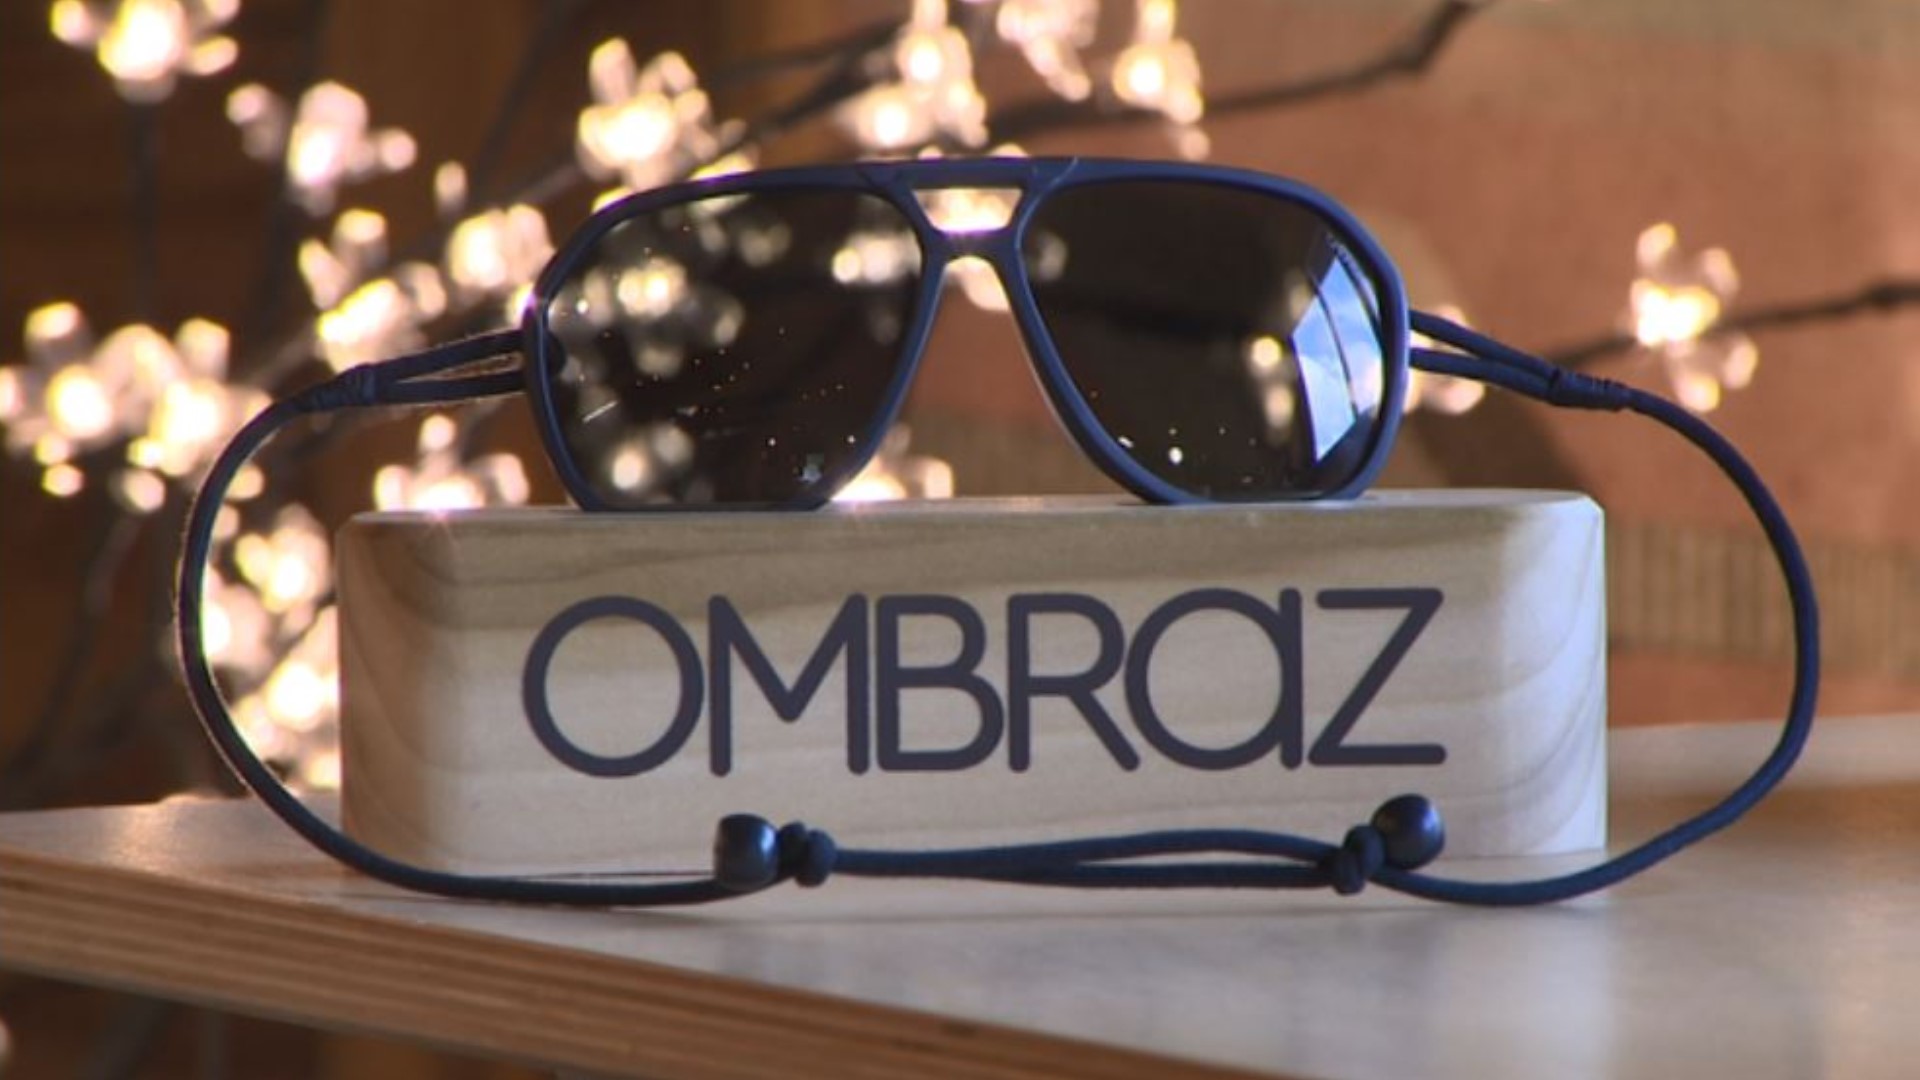 Ombraz is solving an annoying eyewear problem from an office in a Bellevue barn